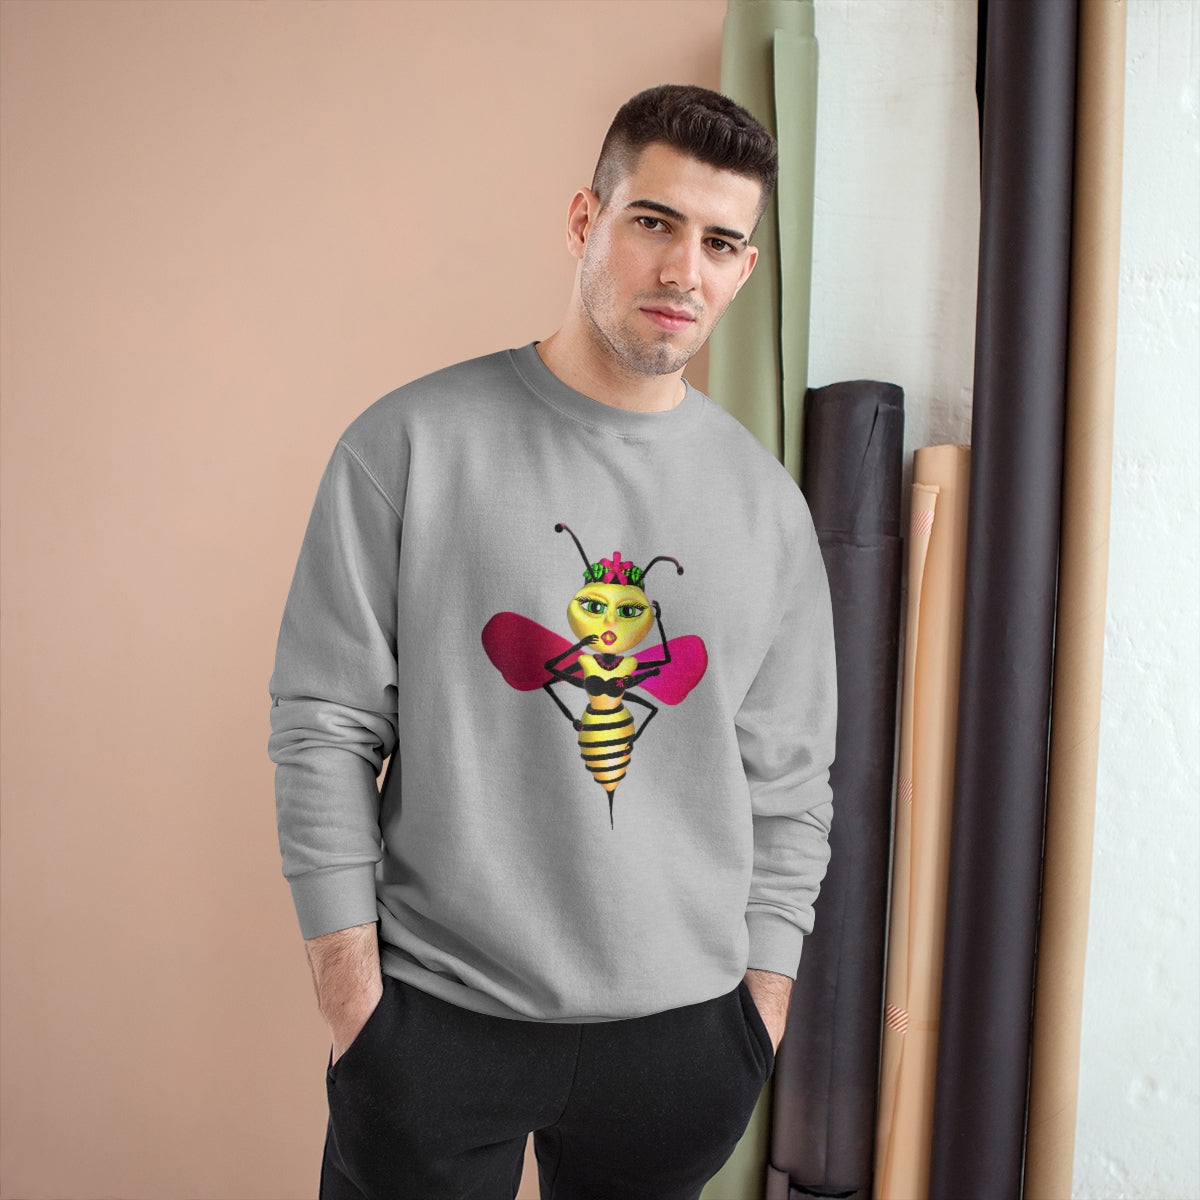 "Sassy Bee" Champion Sweatshirt